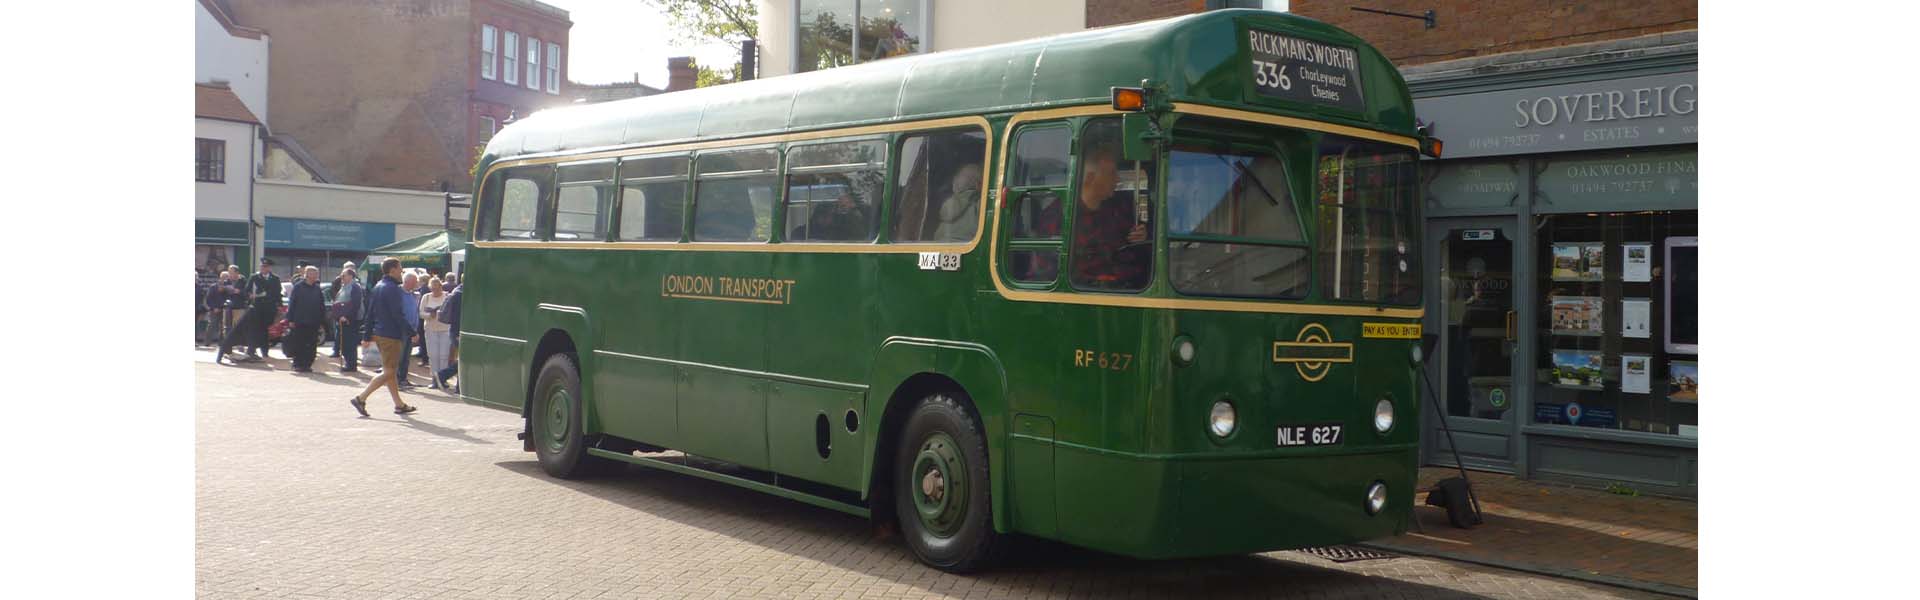 Green London Transport bus on Chesham Broadway displaying a destination of Rickmansworth